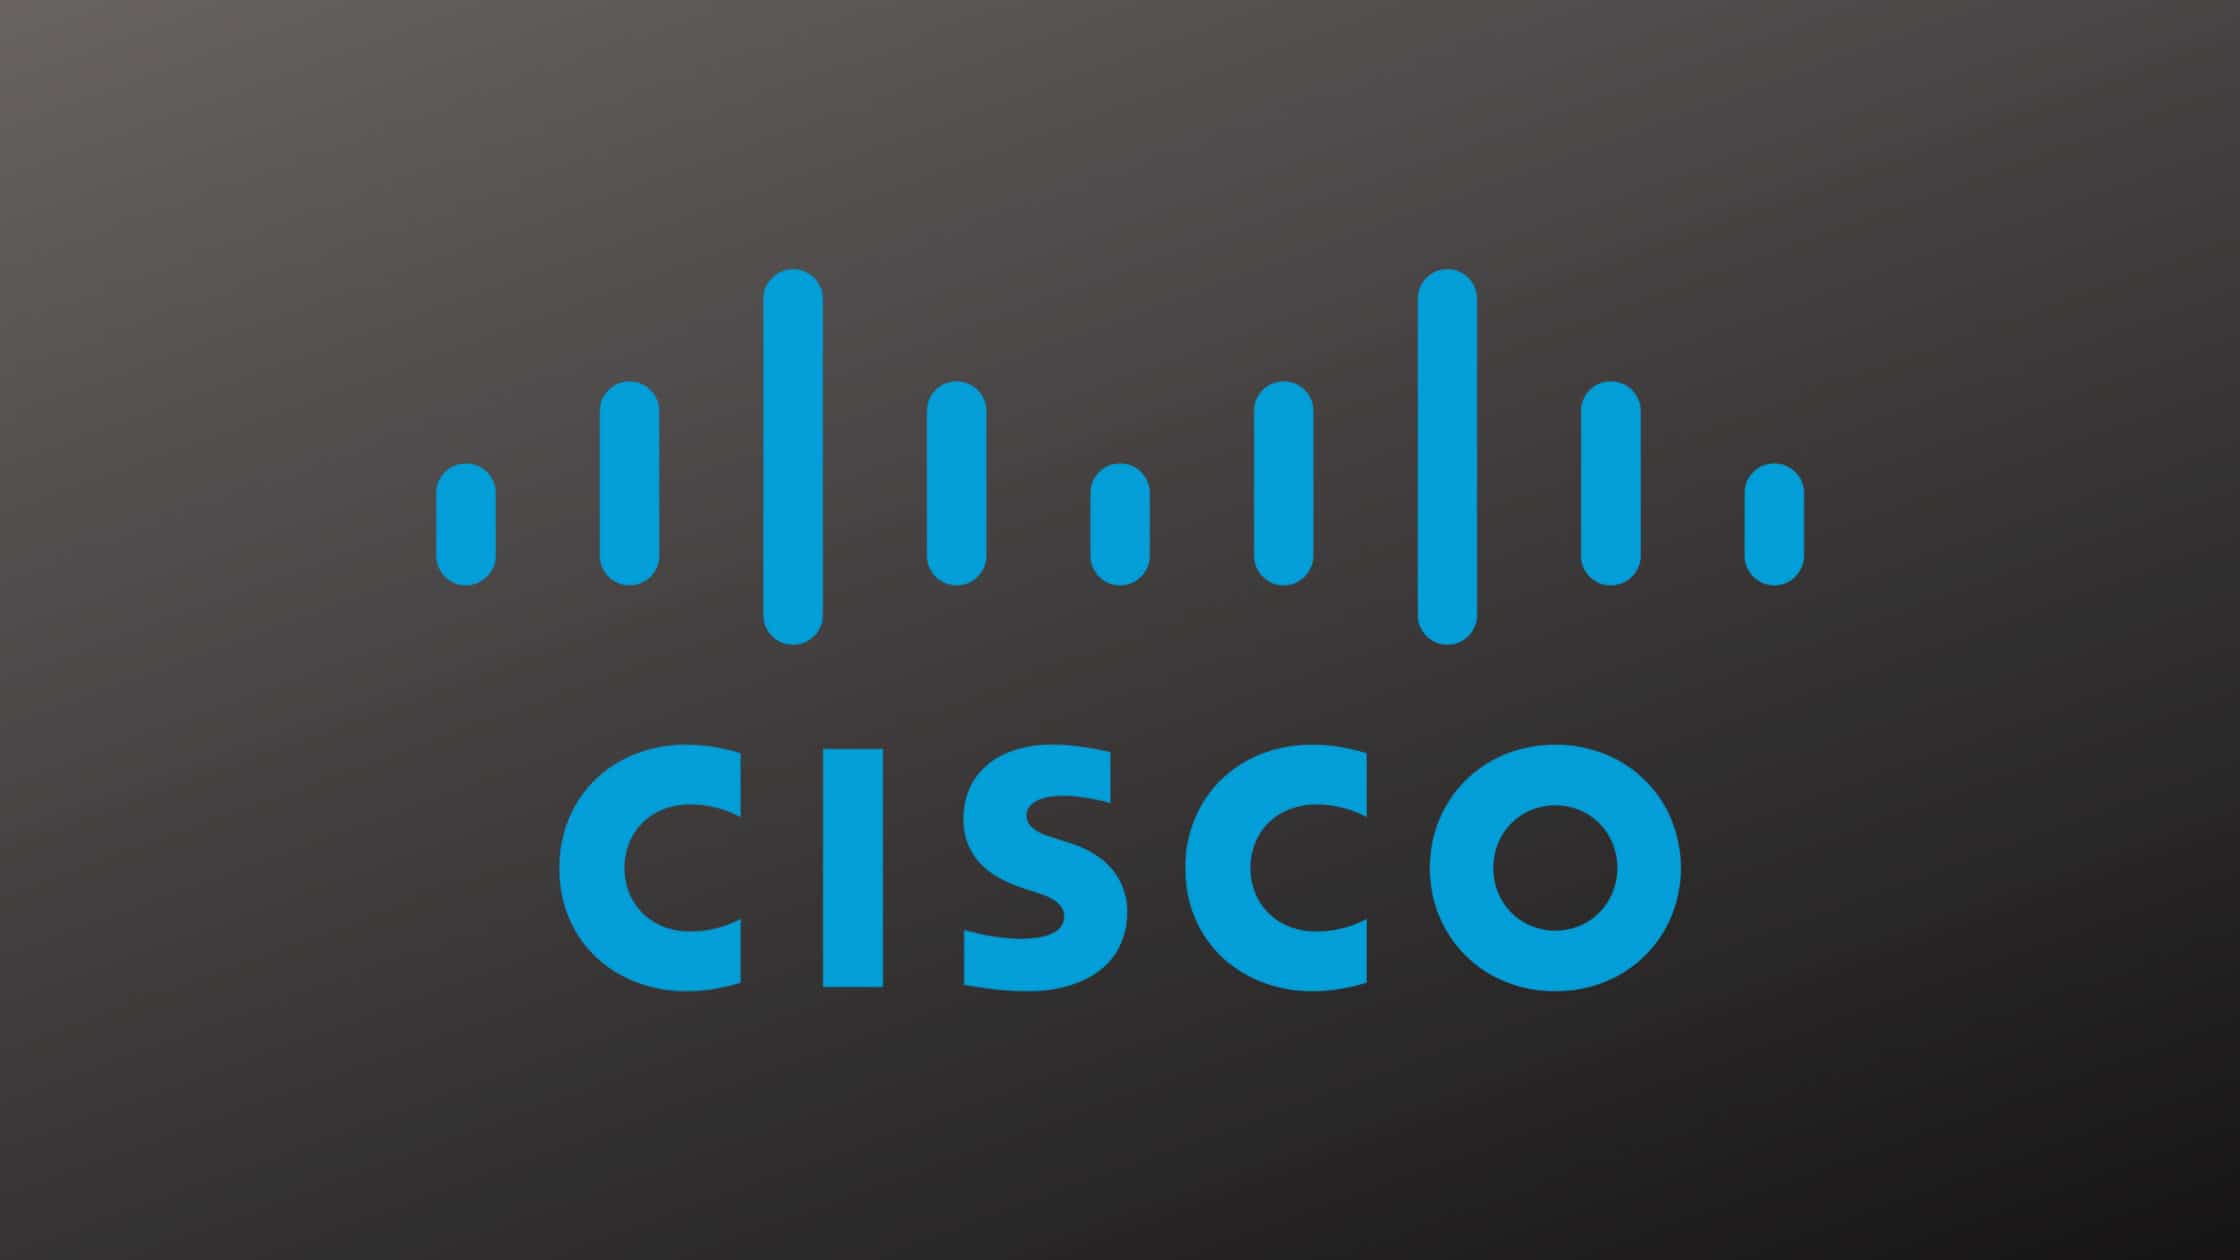 How To Fix Cve 2021 1588 A Denial Of Service Vulnerability In Cisco Nx Os Software